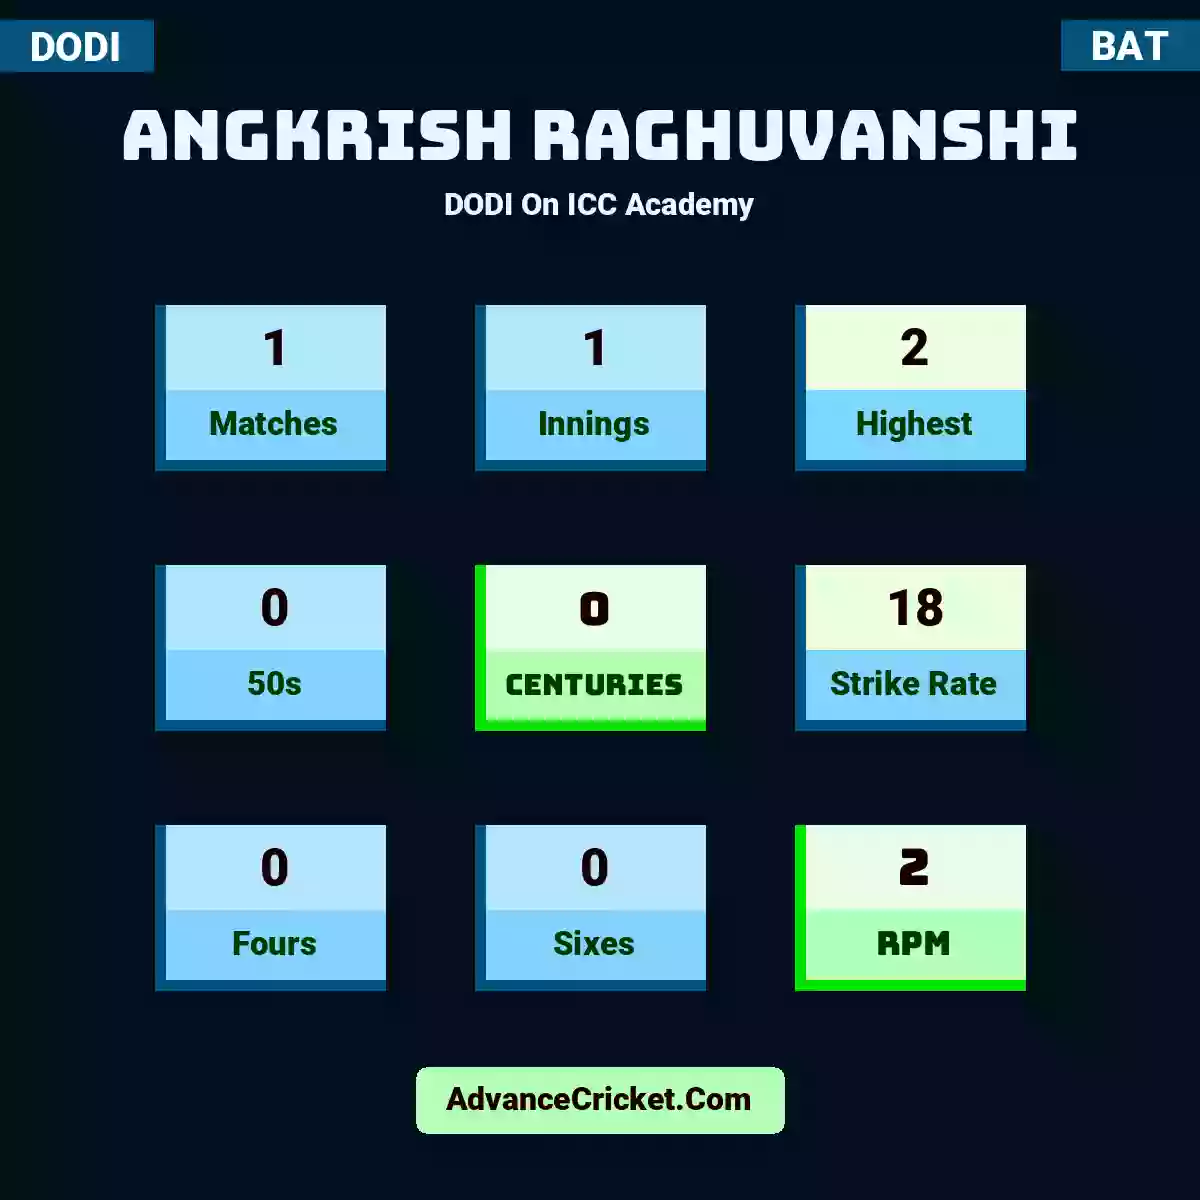 Angkrish Raghuvanshi DODI  On ICC Academy, Angkrish Raghuvanshi played 1 matches, scored 2 runs as highest, 0 half-centuries, and 0 centuries, with a strike rate of 18. A.Raghuvanshi hit 0 fours and 0 sixes, with an RPM of 2.